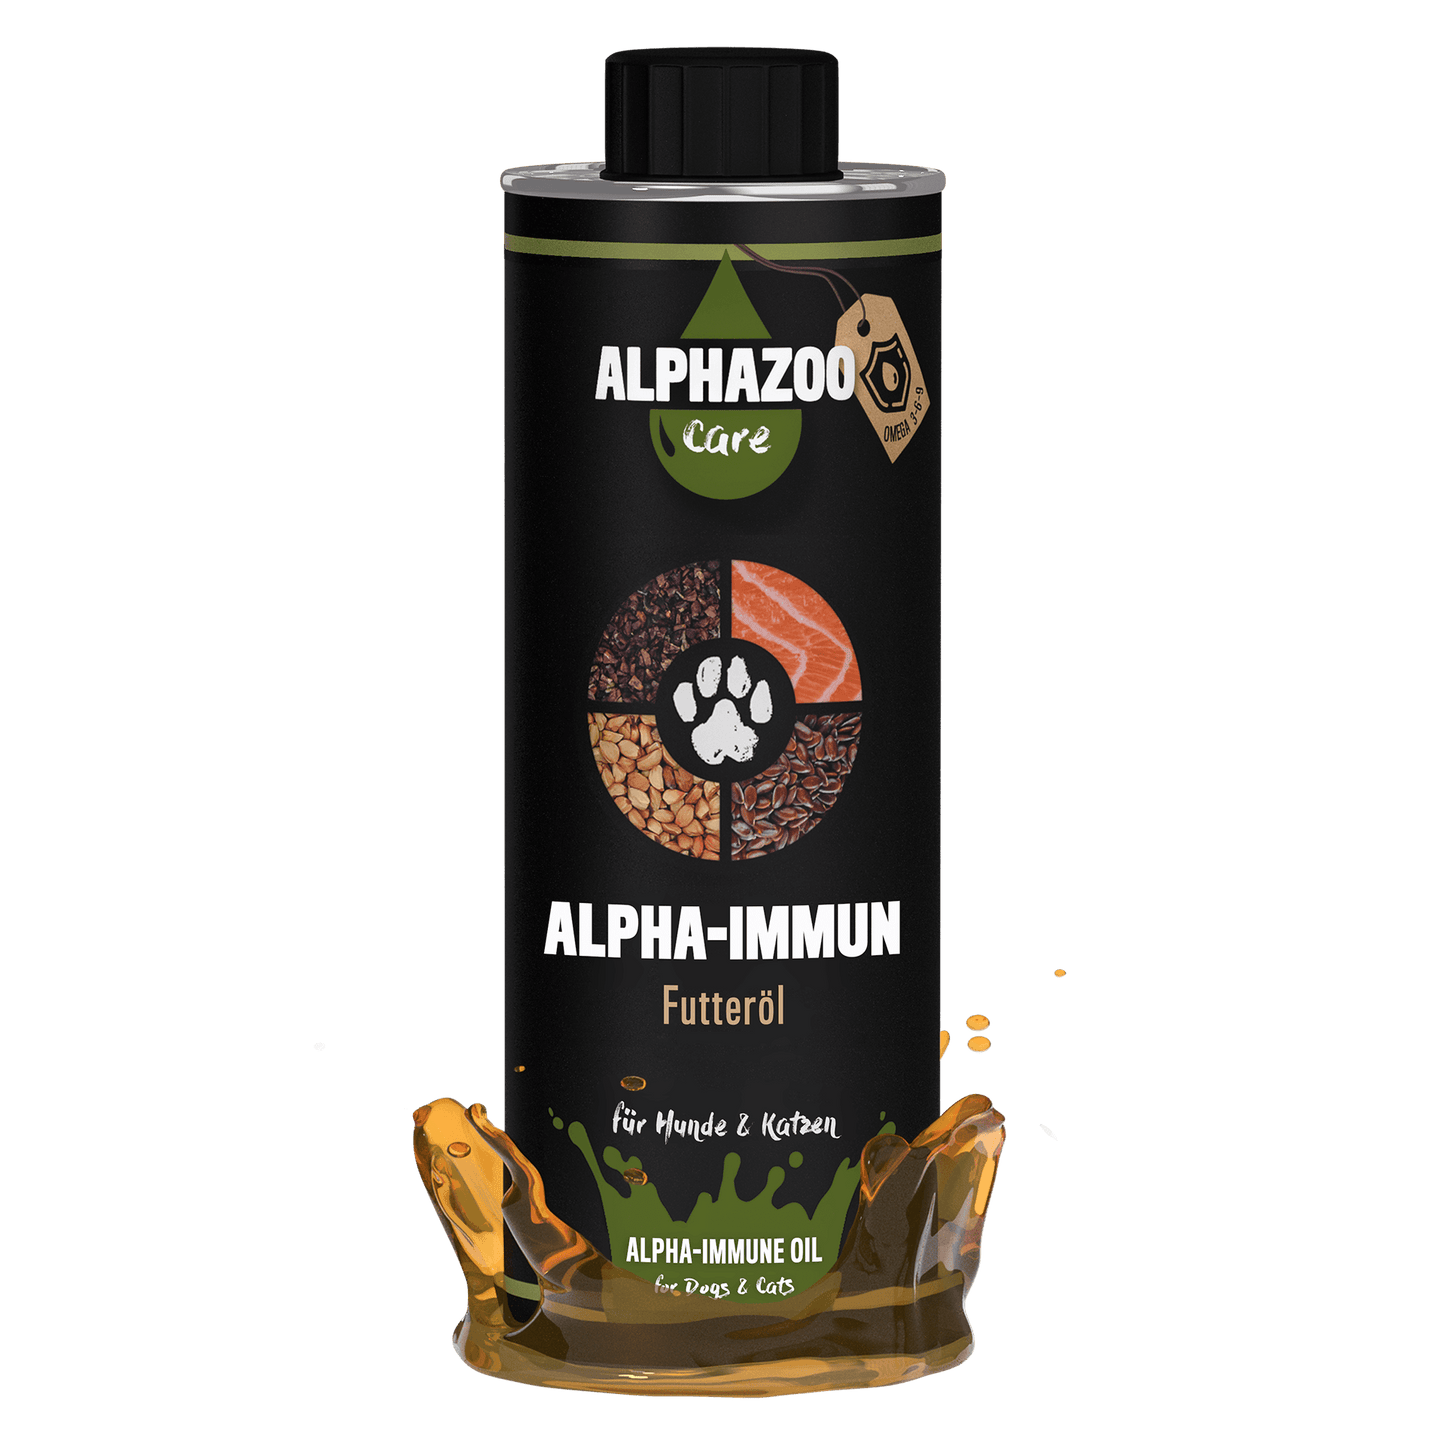 Alpha-immune feed oil